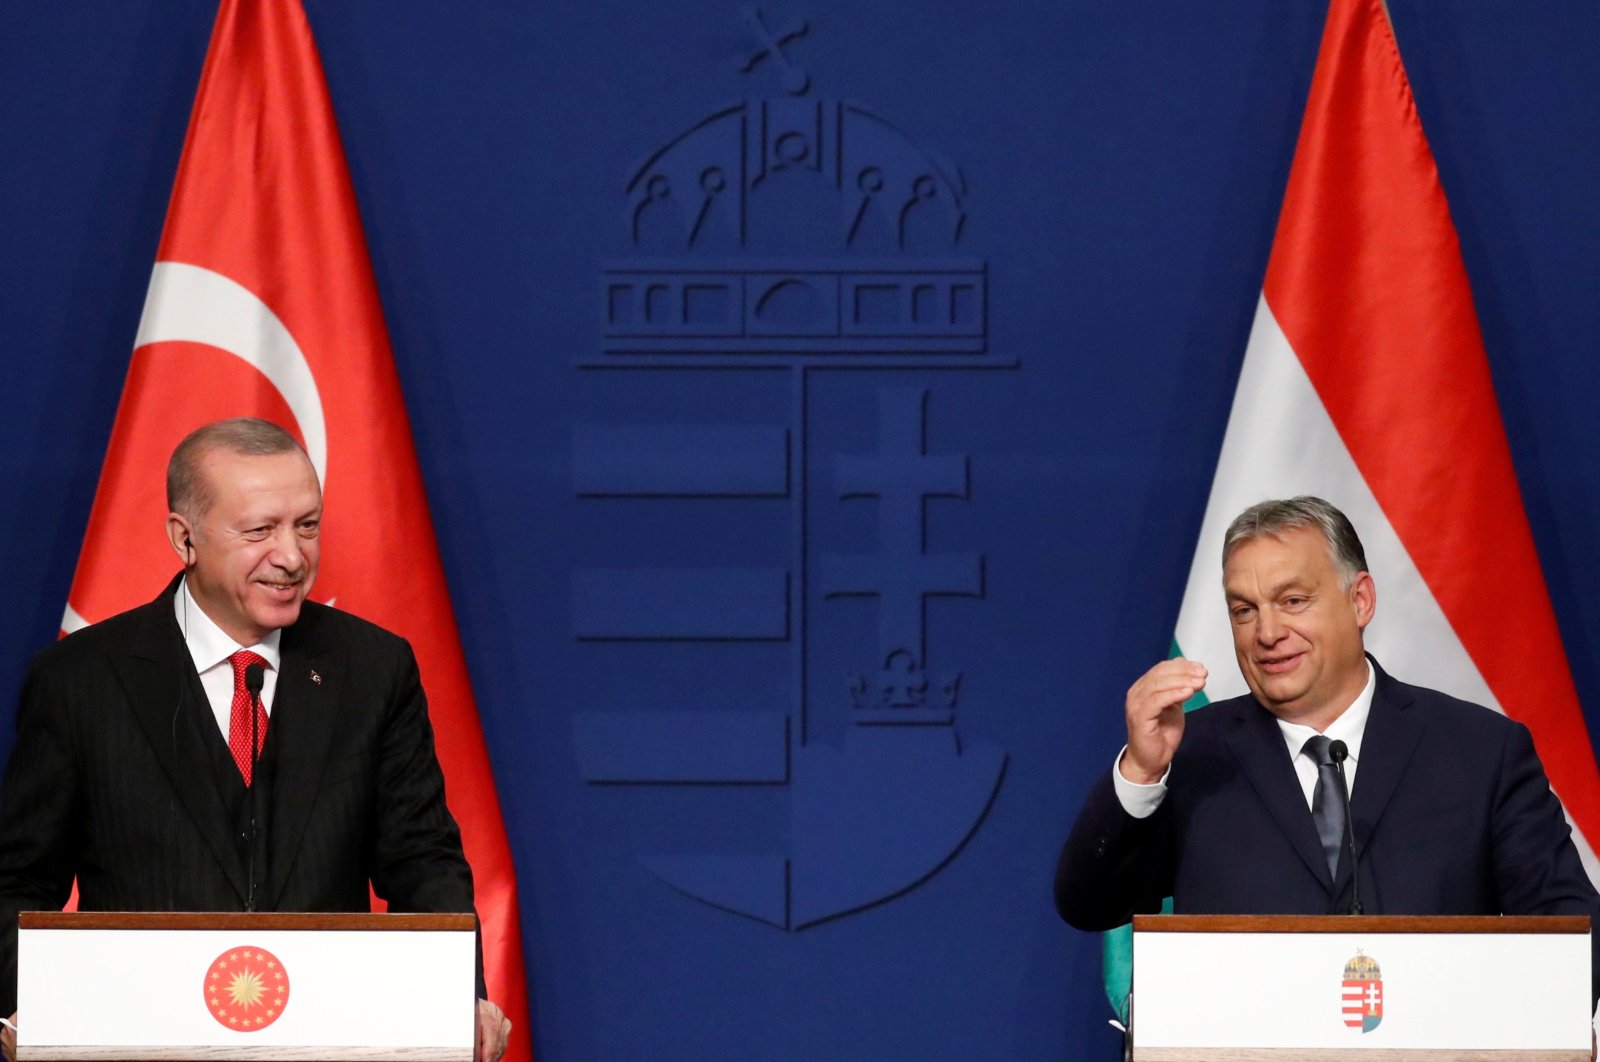 Turkish President Recep Tayyip Erdoğan and Hungarian Prime Minister Viktor Orban hold a news conference in Budapest, Hungary November 7, 2019. REUTERS/Bernadett Szabo